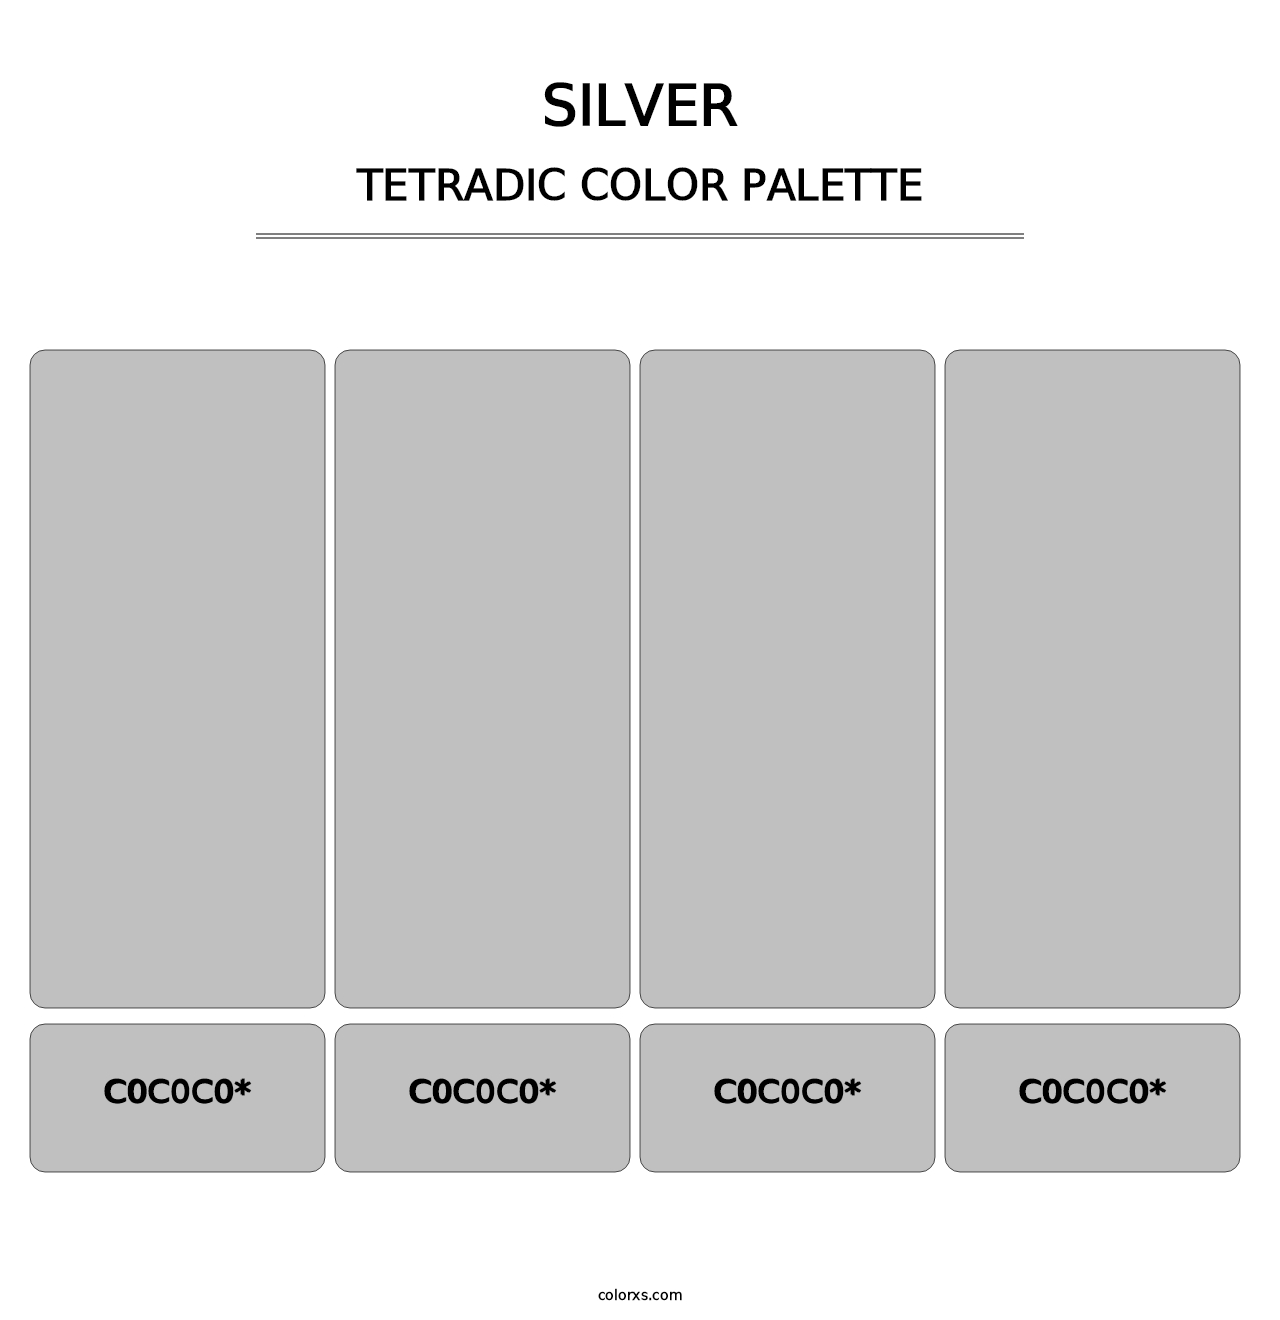 Silver - Tetradic Color Palette